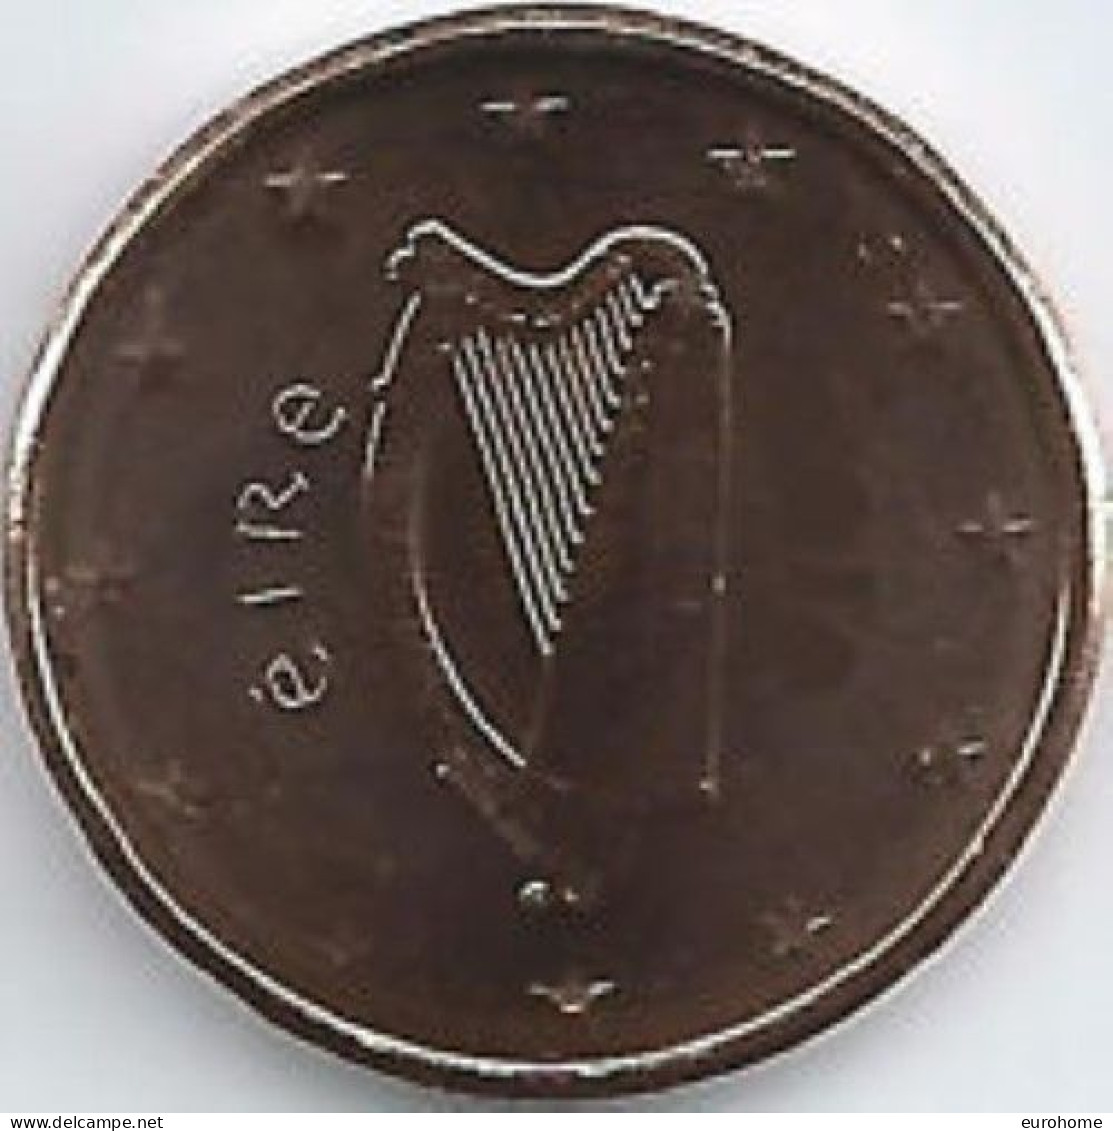 Ierland 2023  2 Cent  UNC Uit De BU  UNC Du Coffret  ZEER ZELDZAAM - EXTREME RARE  5.000 Ex !!! - Irlanda